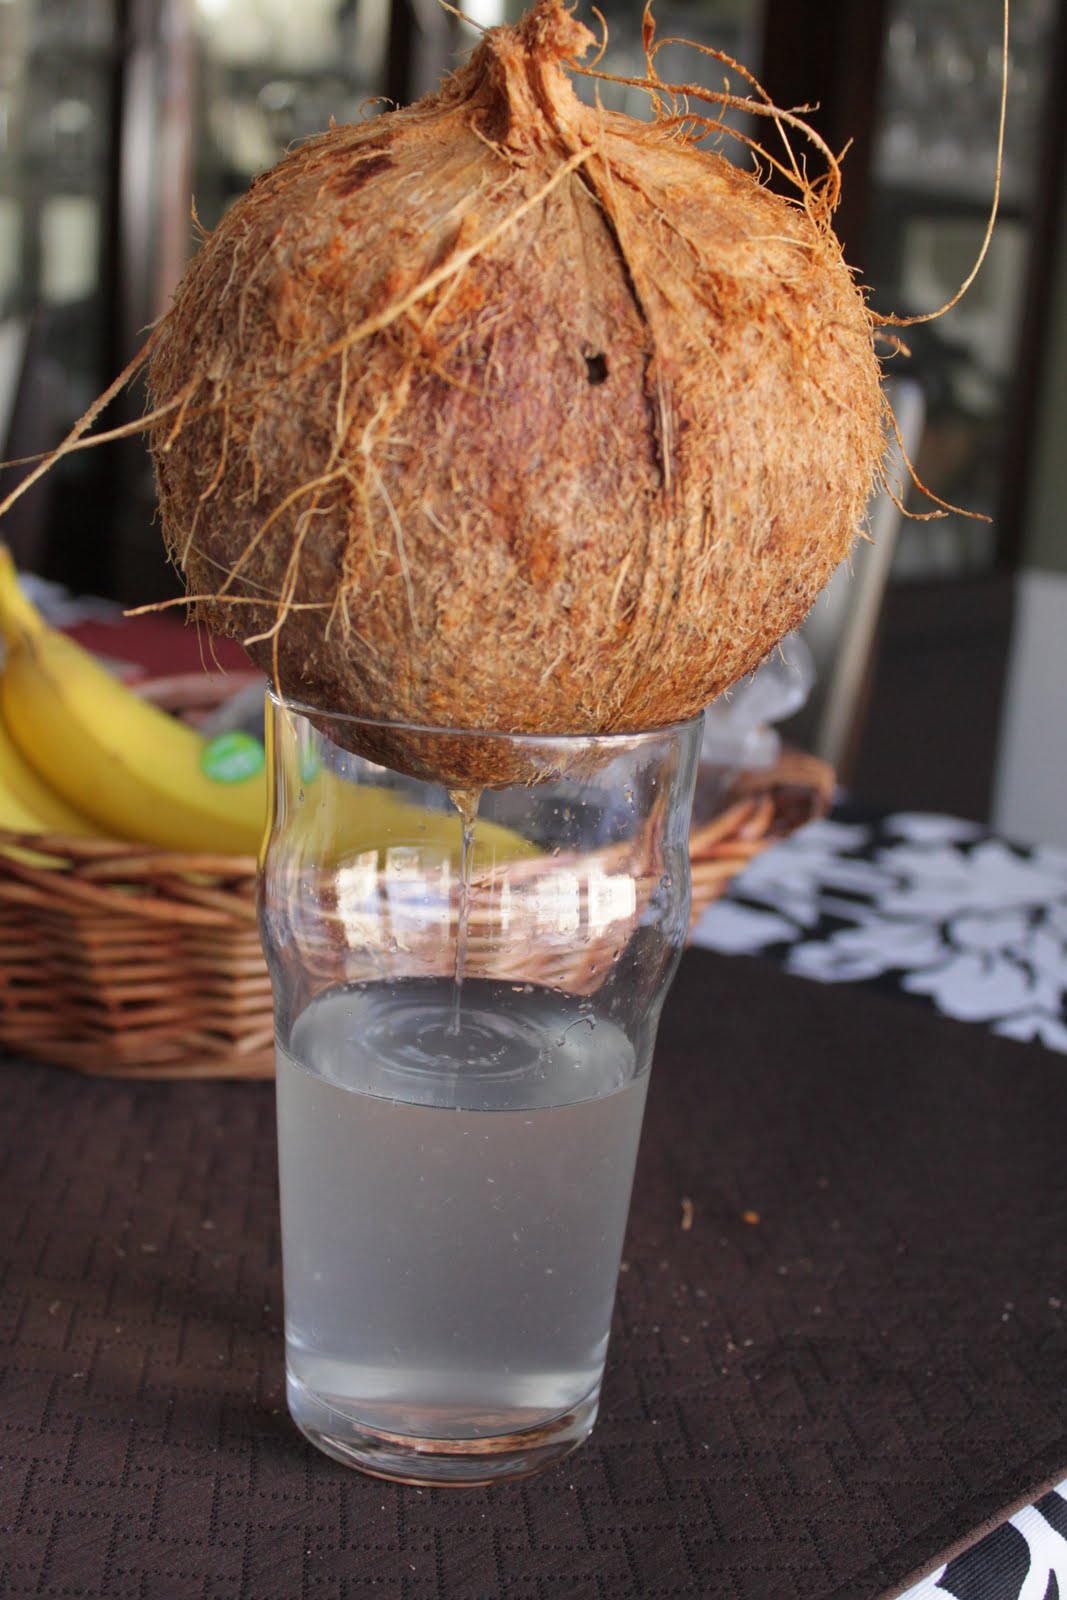 [coconut.JPG]